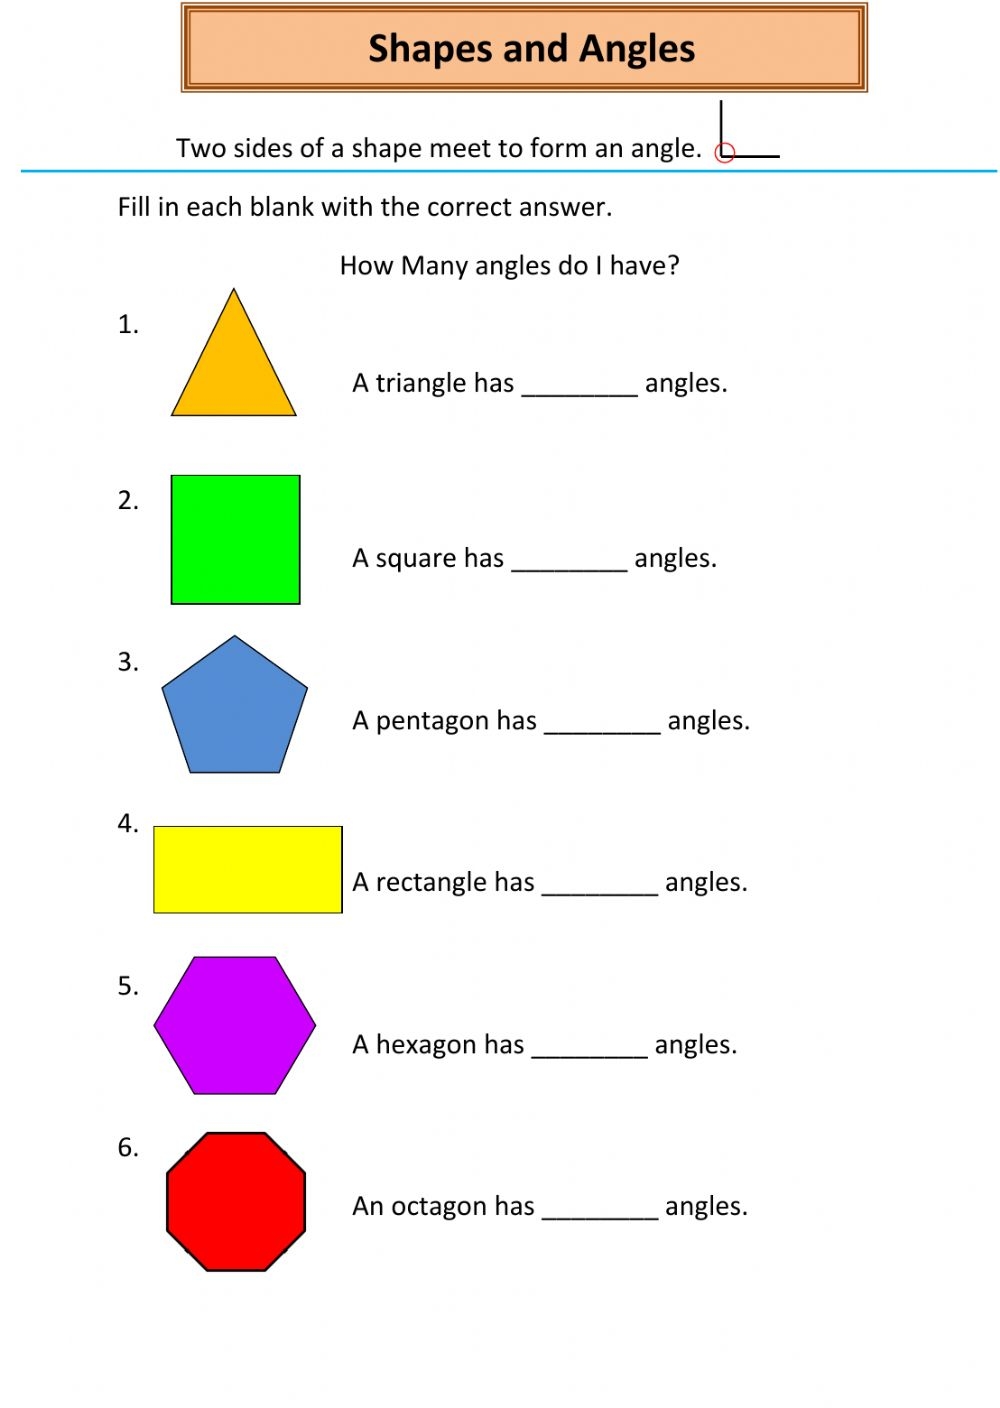 shapes-and-angles-interactive-worksheet-math-worksheet-answers